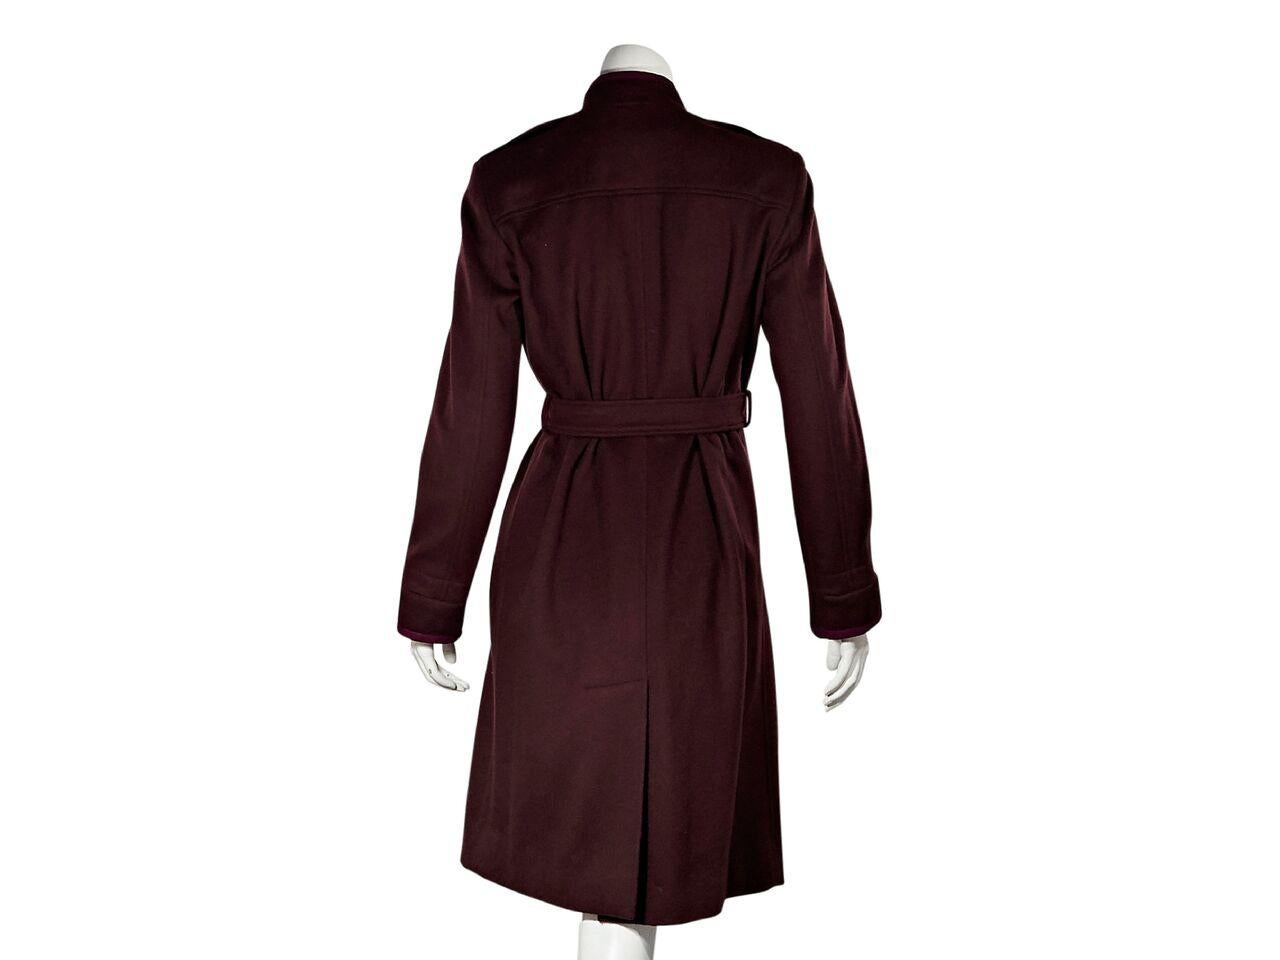 Product details:  Vintage burgundy long wool coat by Yves Saint Laurent.  Stand collar.  Long sleeves.  Button-front closure.  Adjustable belted waist.  Front slide pockets.  Back hem vent.  38